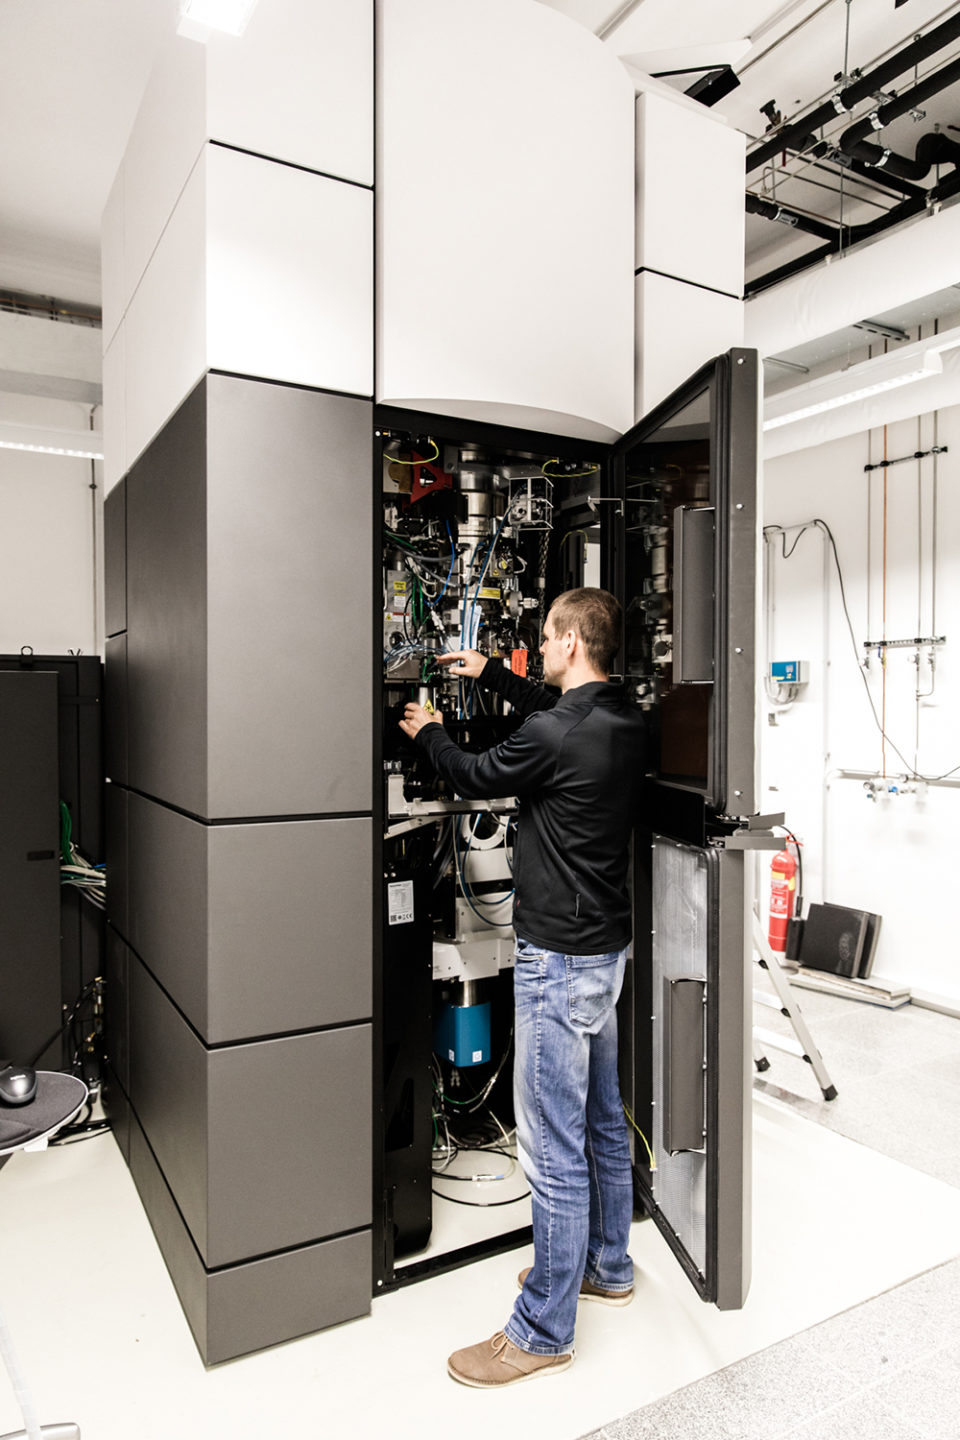 ISTA  IST Austria inaugurates new cryo-electron microscopes